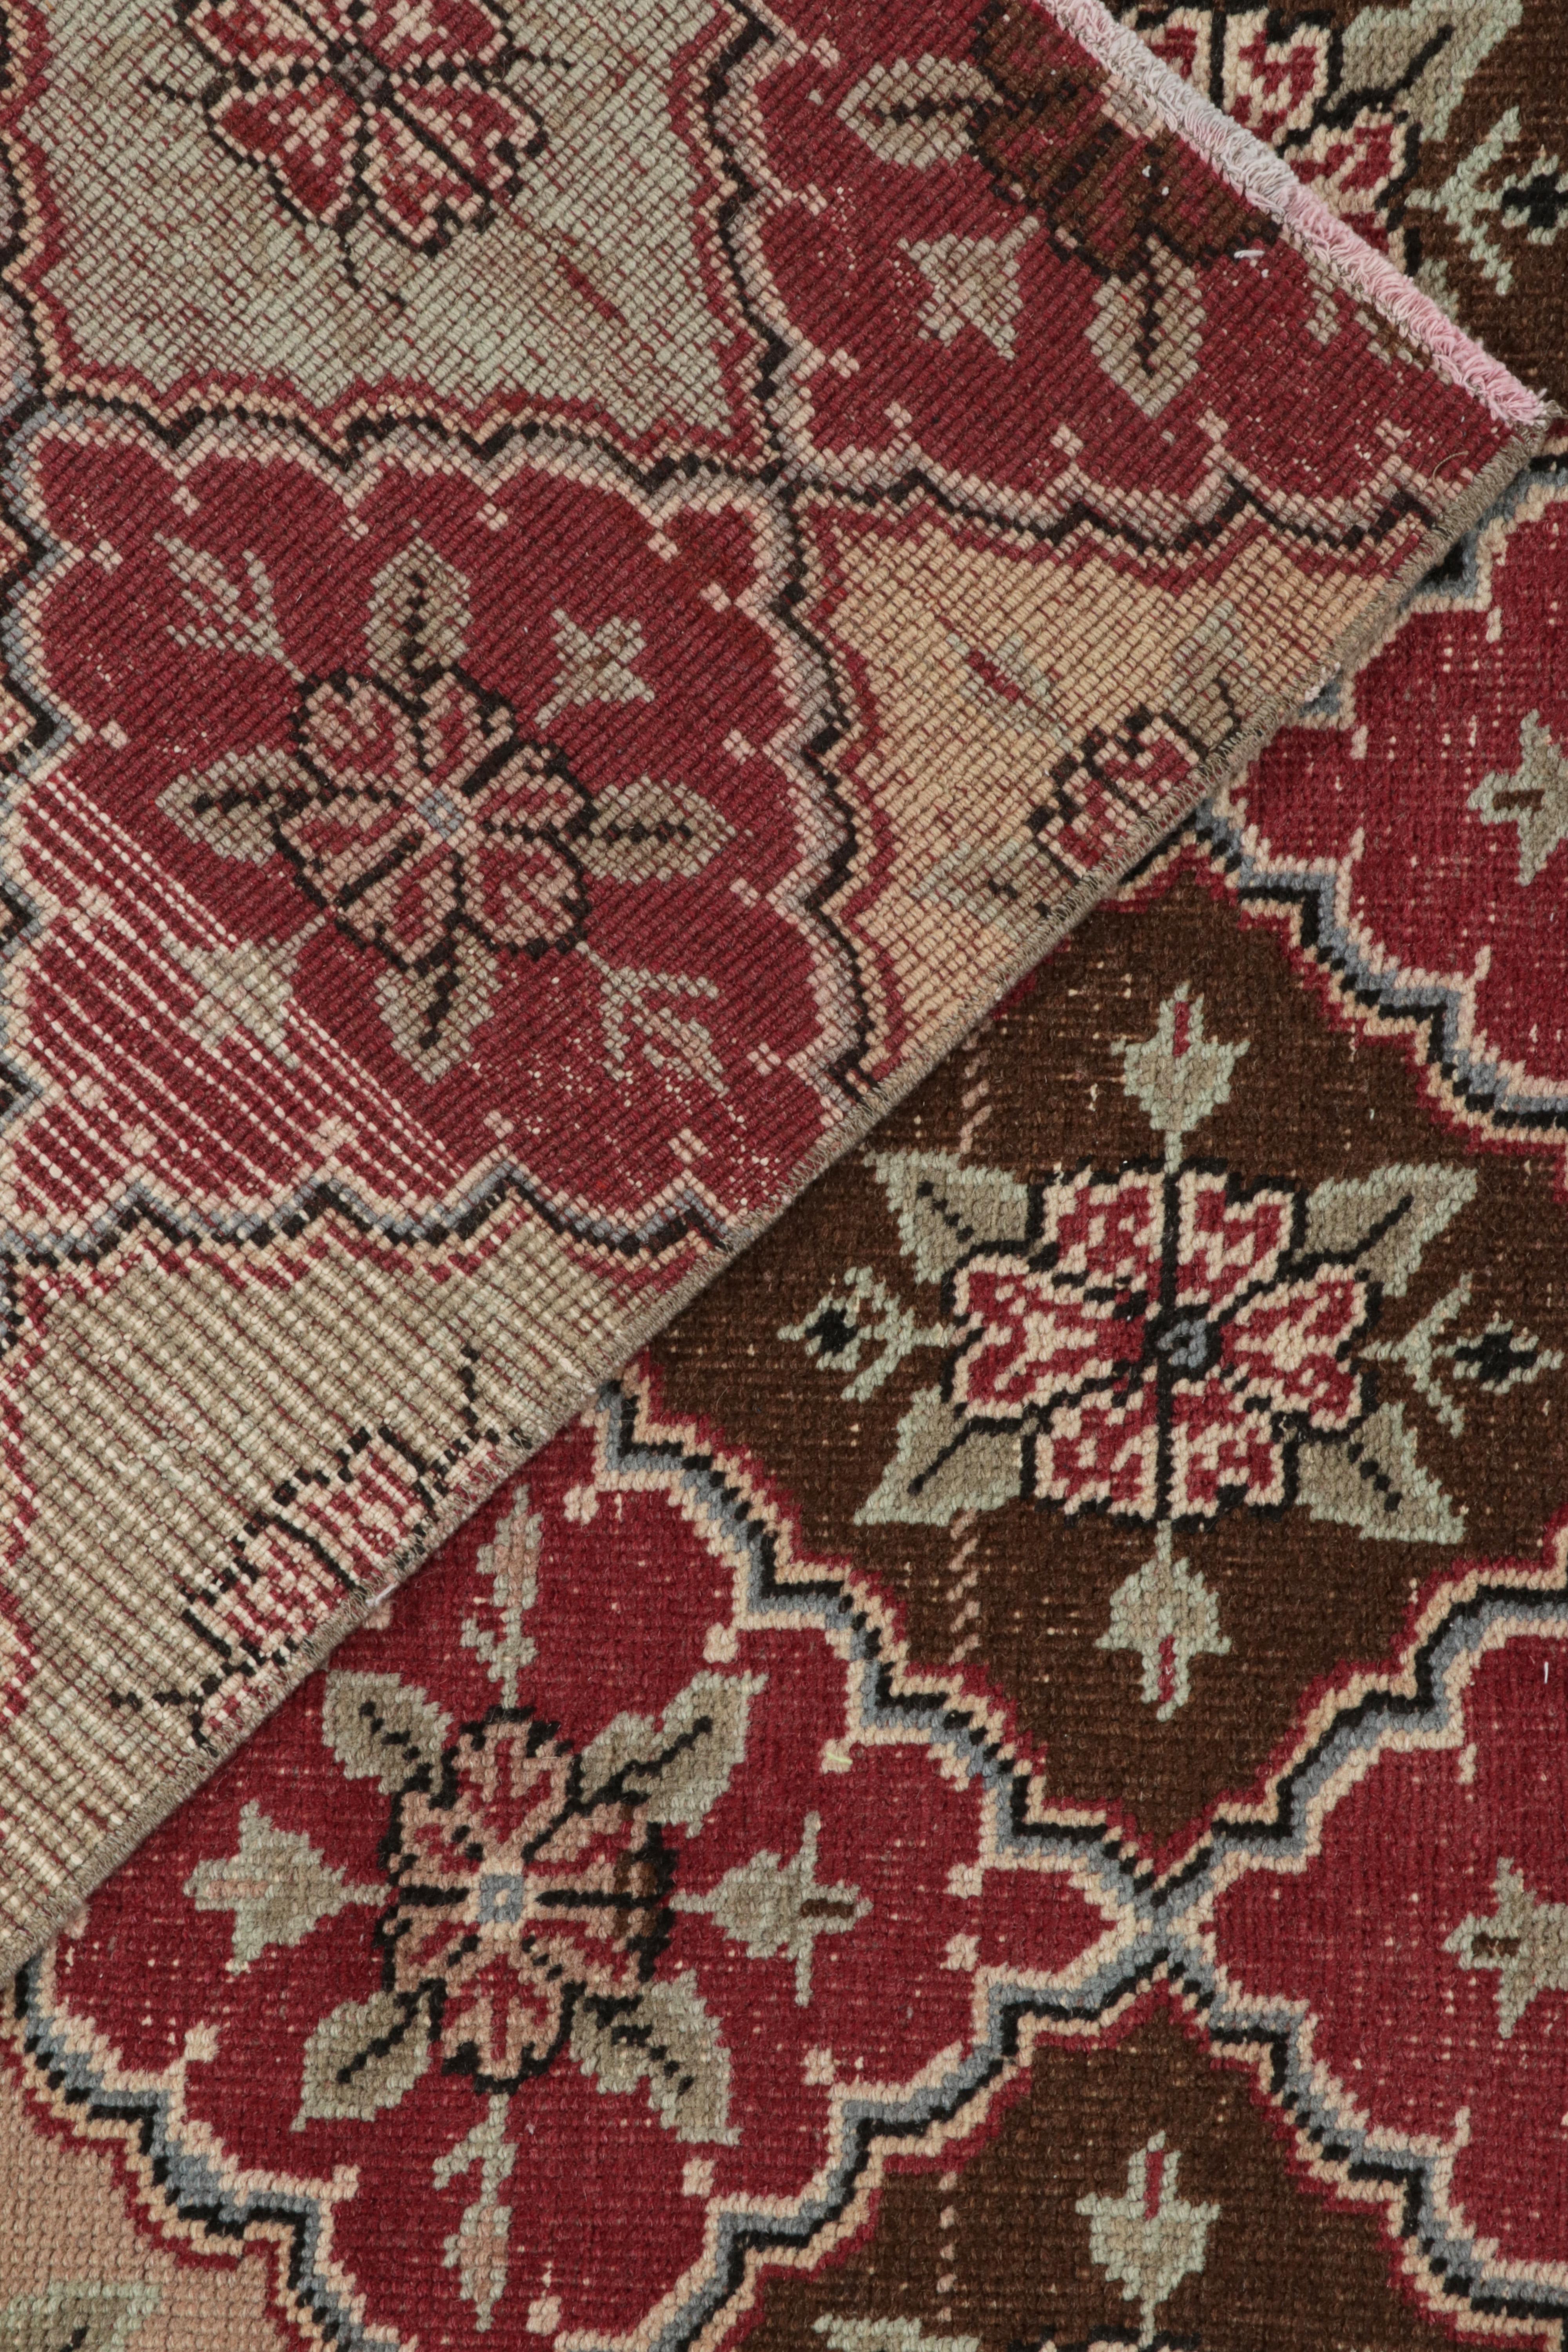 Mid-20th Century 1960s Vintage Deco Rug in Red, Beige-Brown Floral Trellis Pattern by Rug & Kilim For Sale